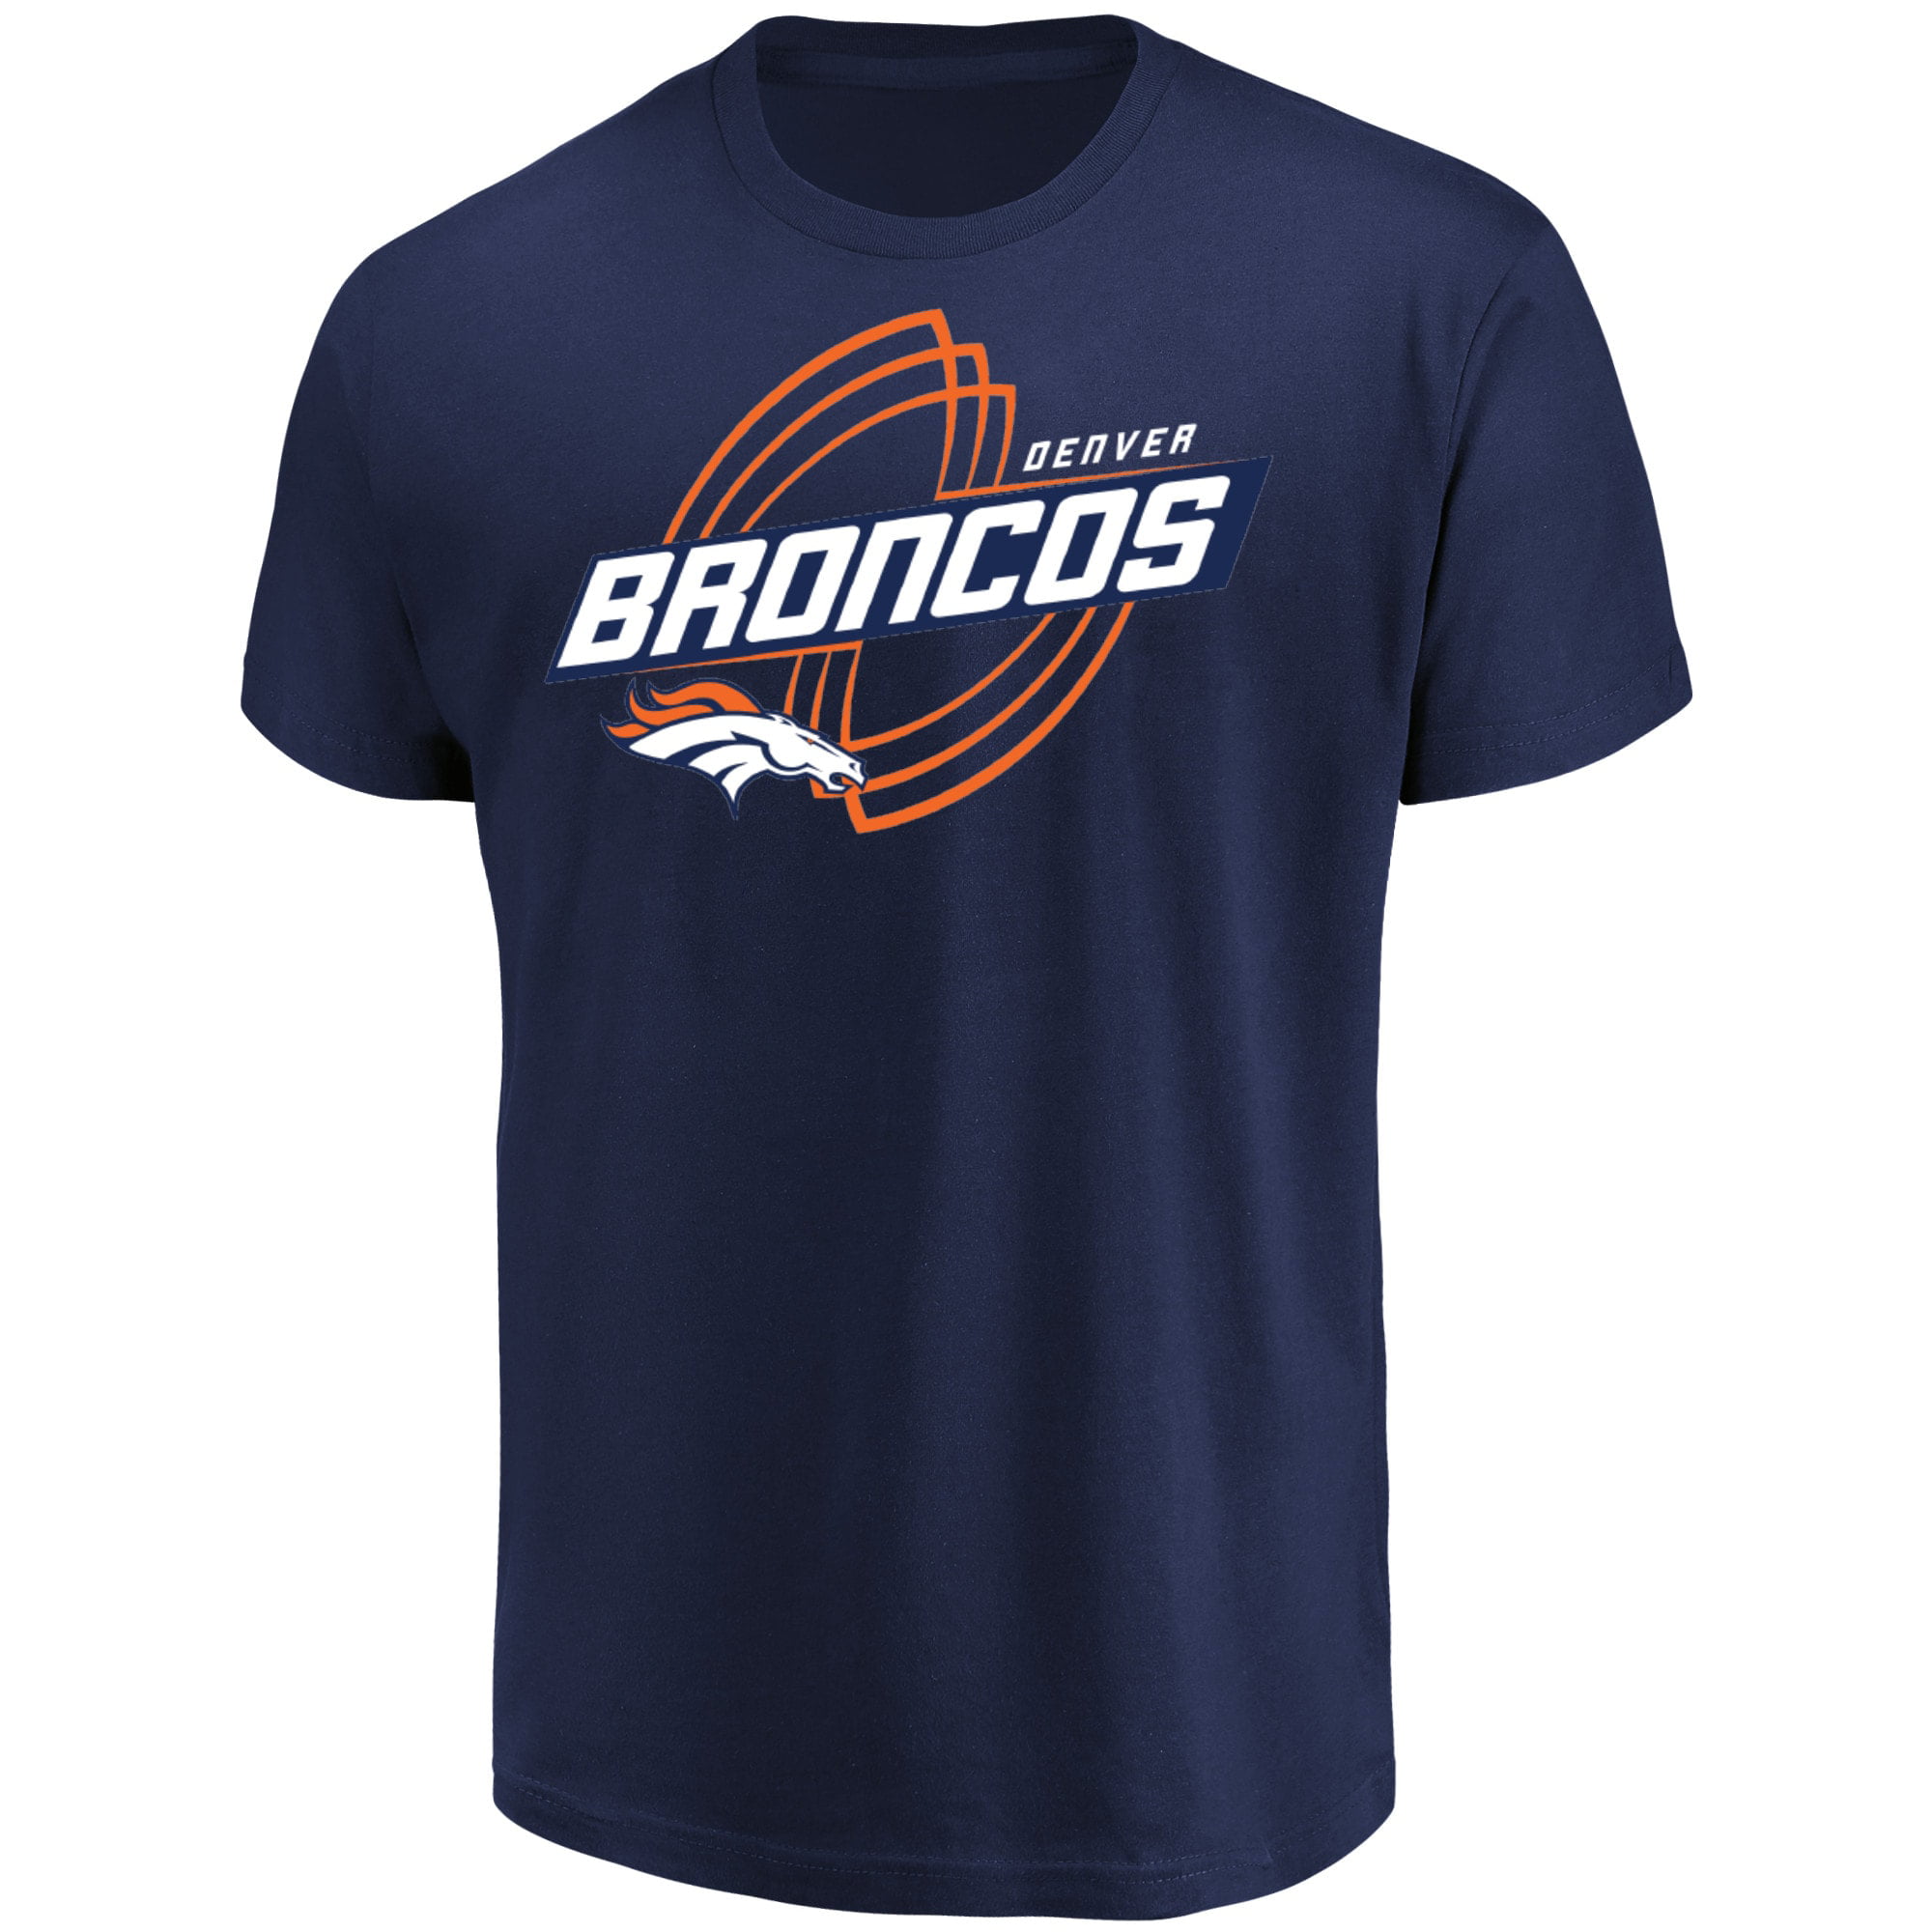 NFL T-shirts - Walmart.com